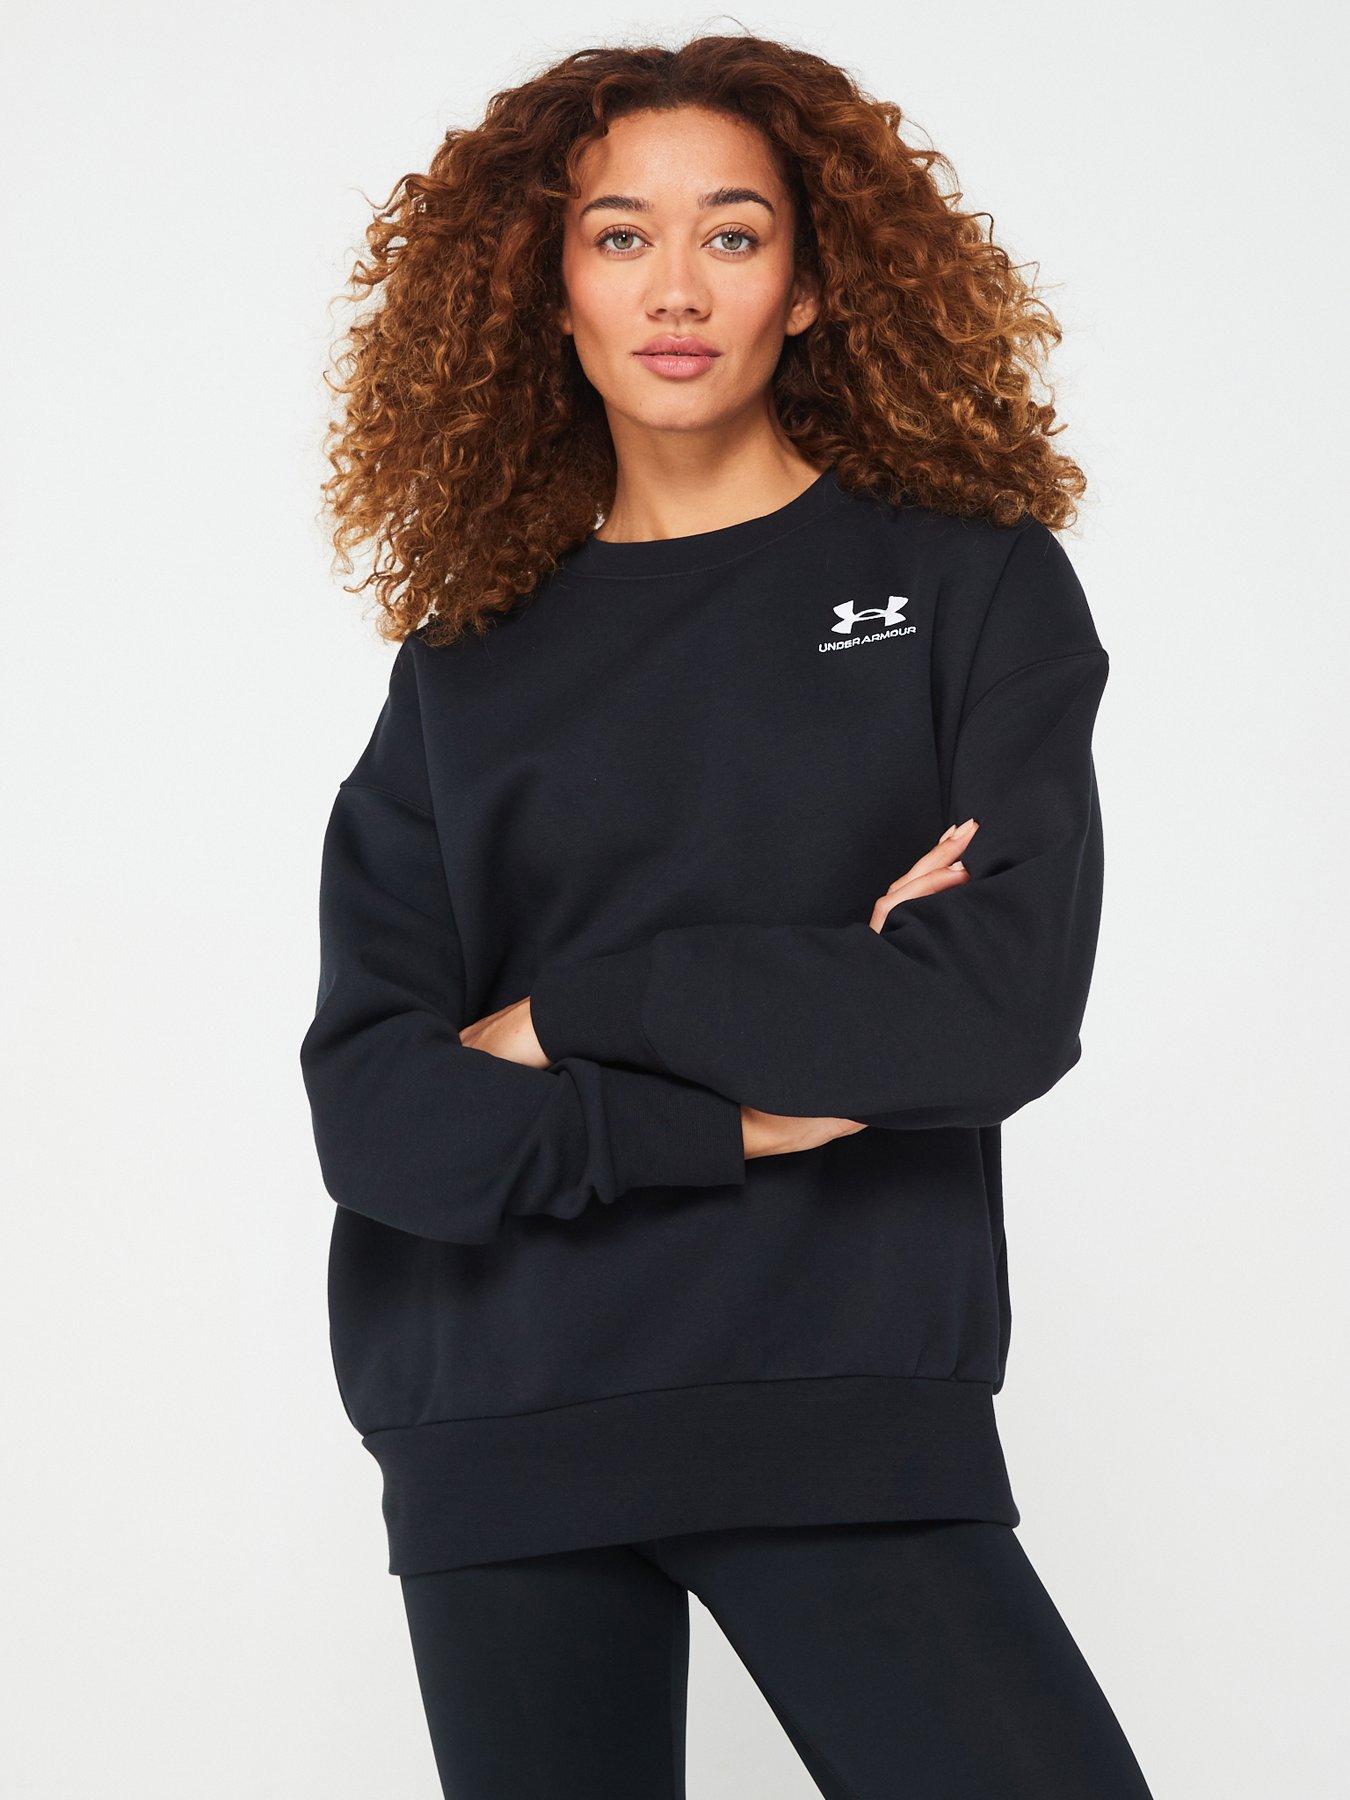 XL, Hoodies & sweatshirts, Women